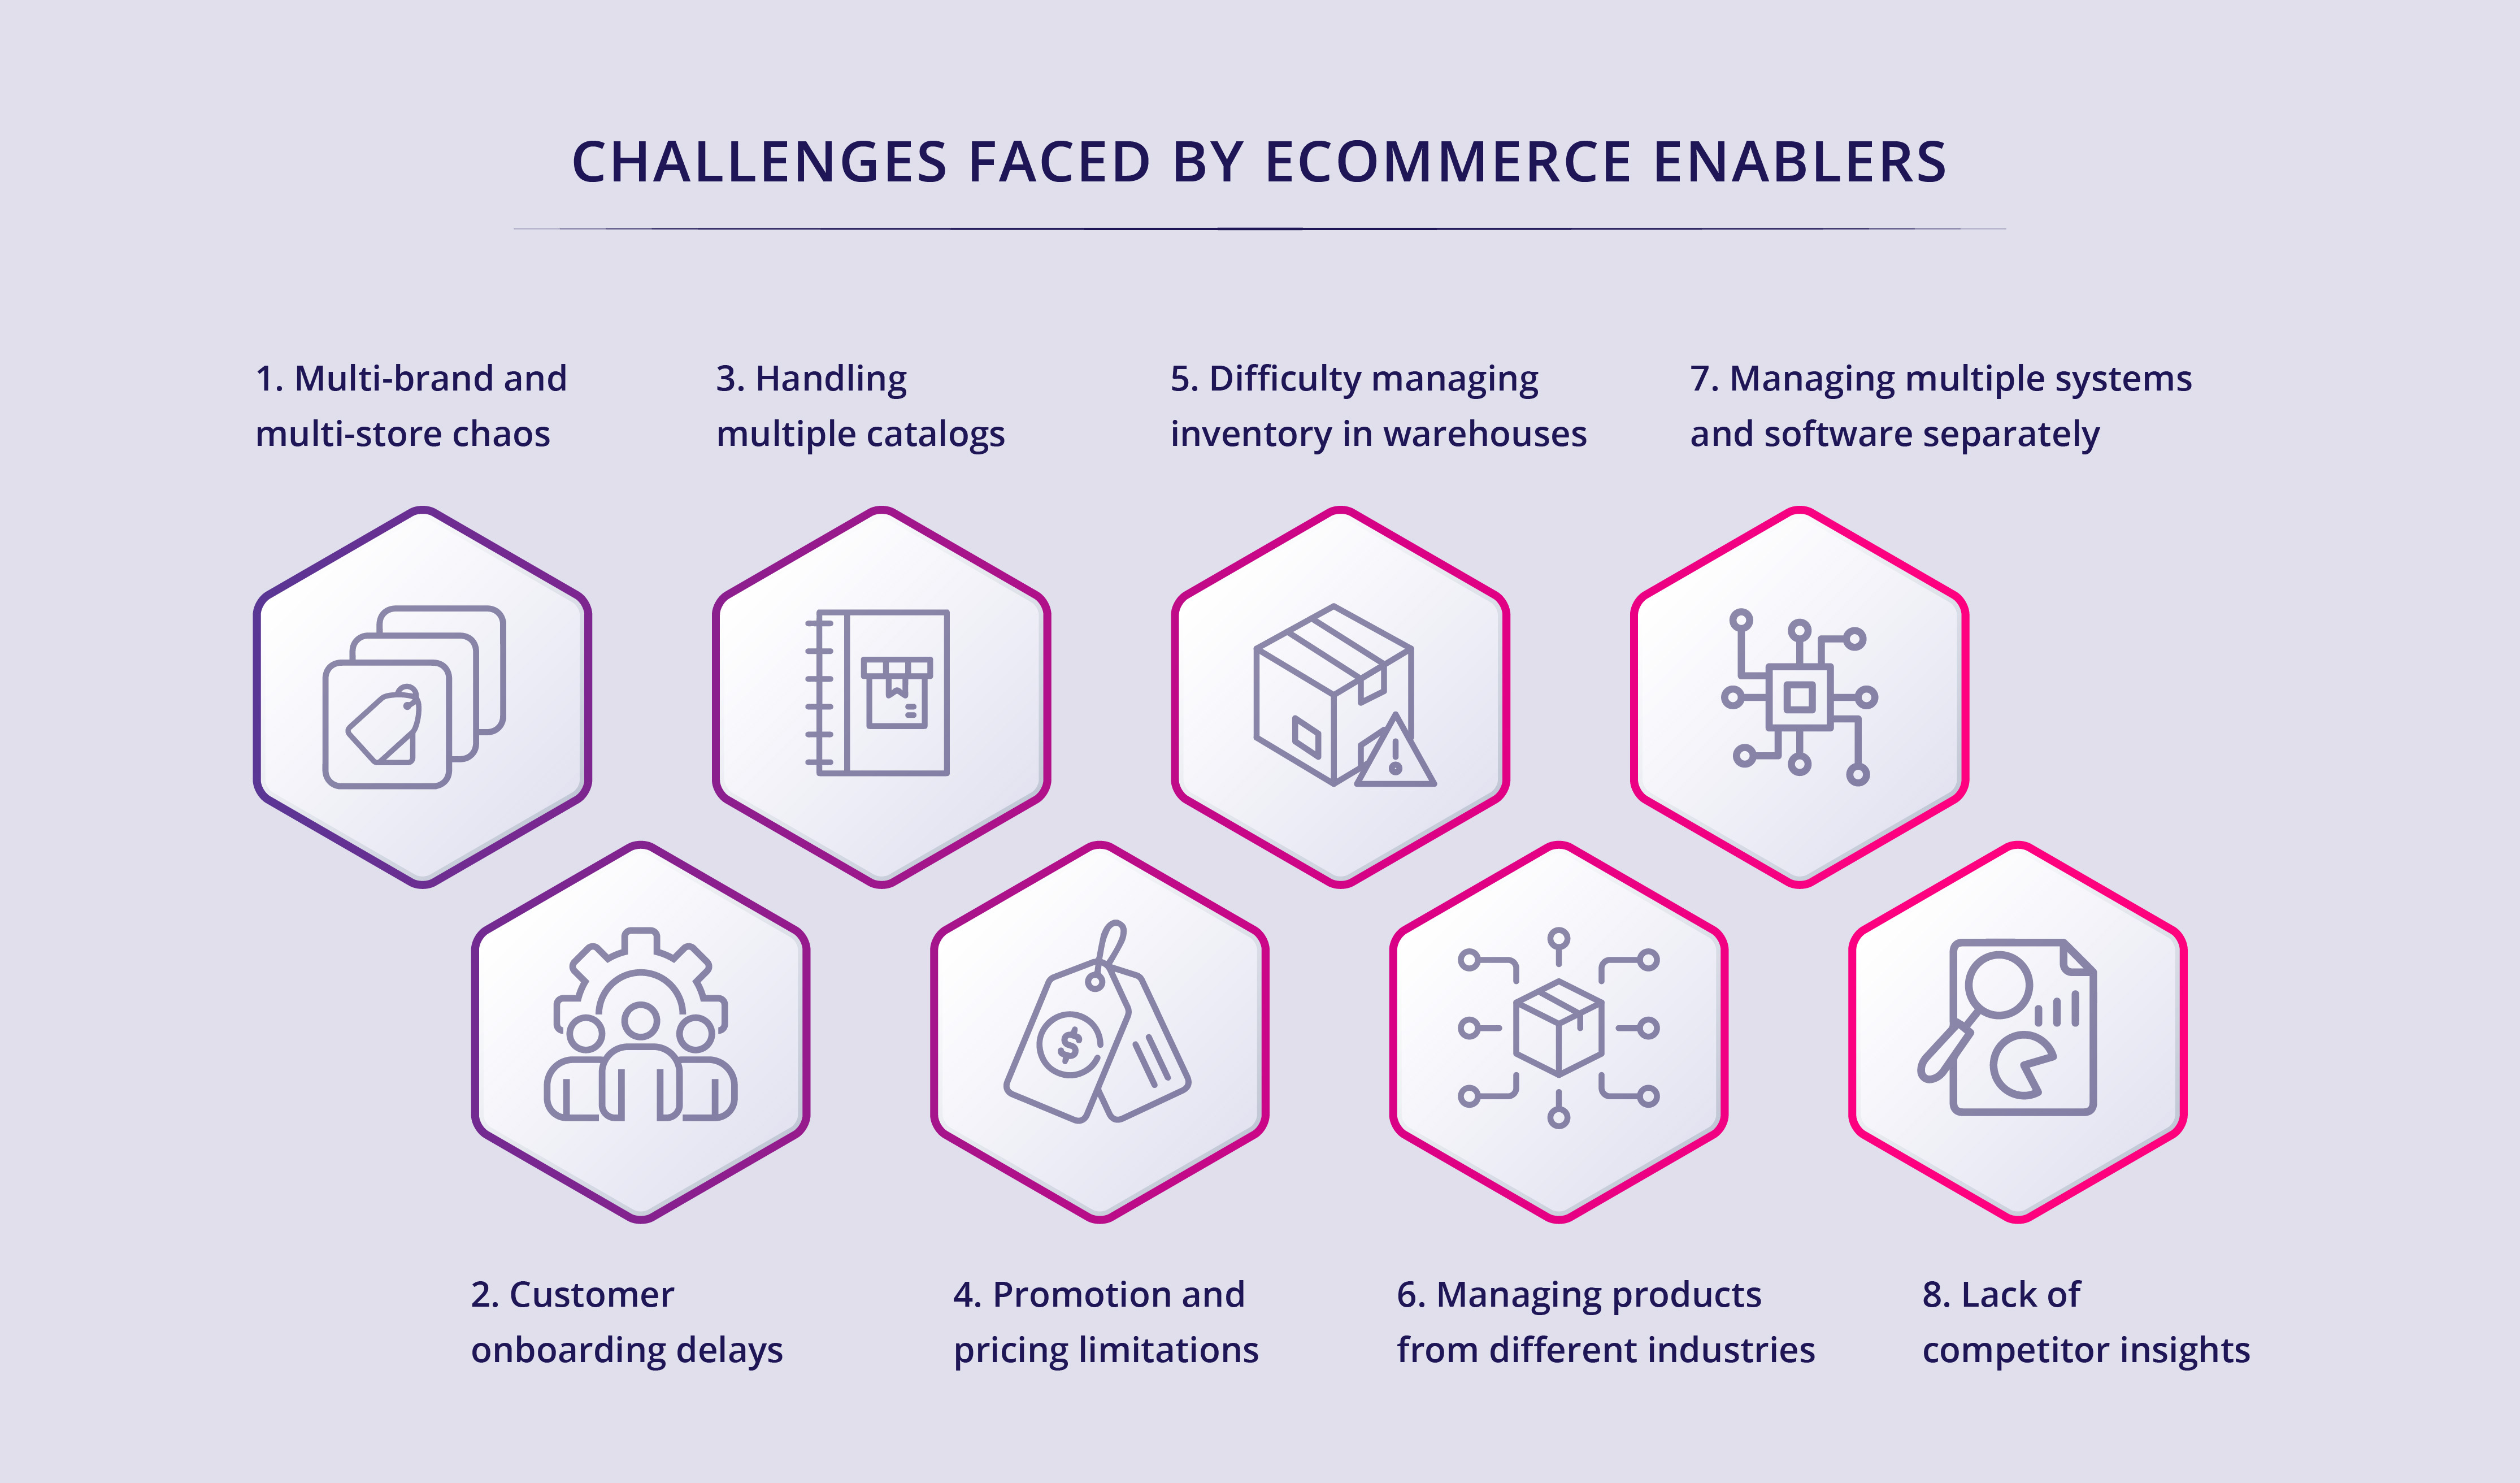 ecommerce enabler challenges